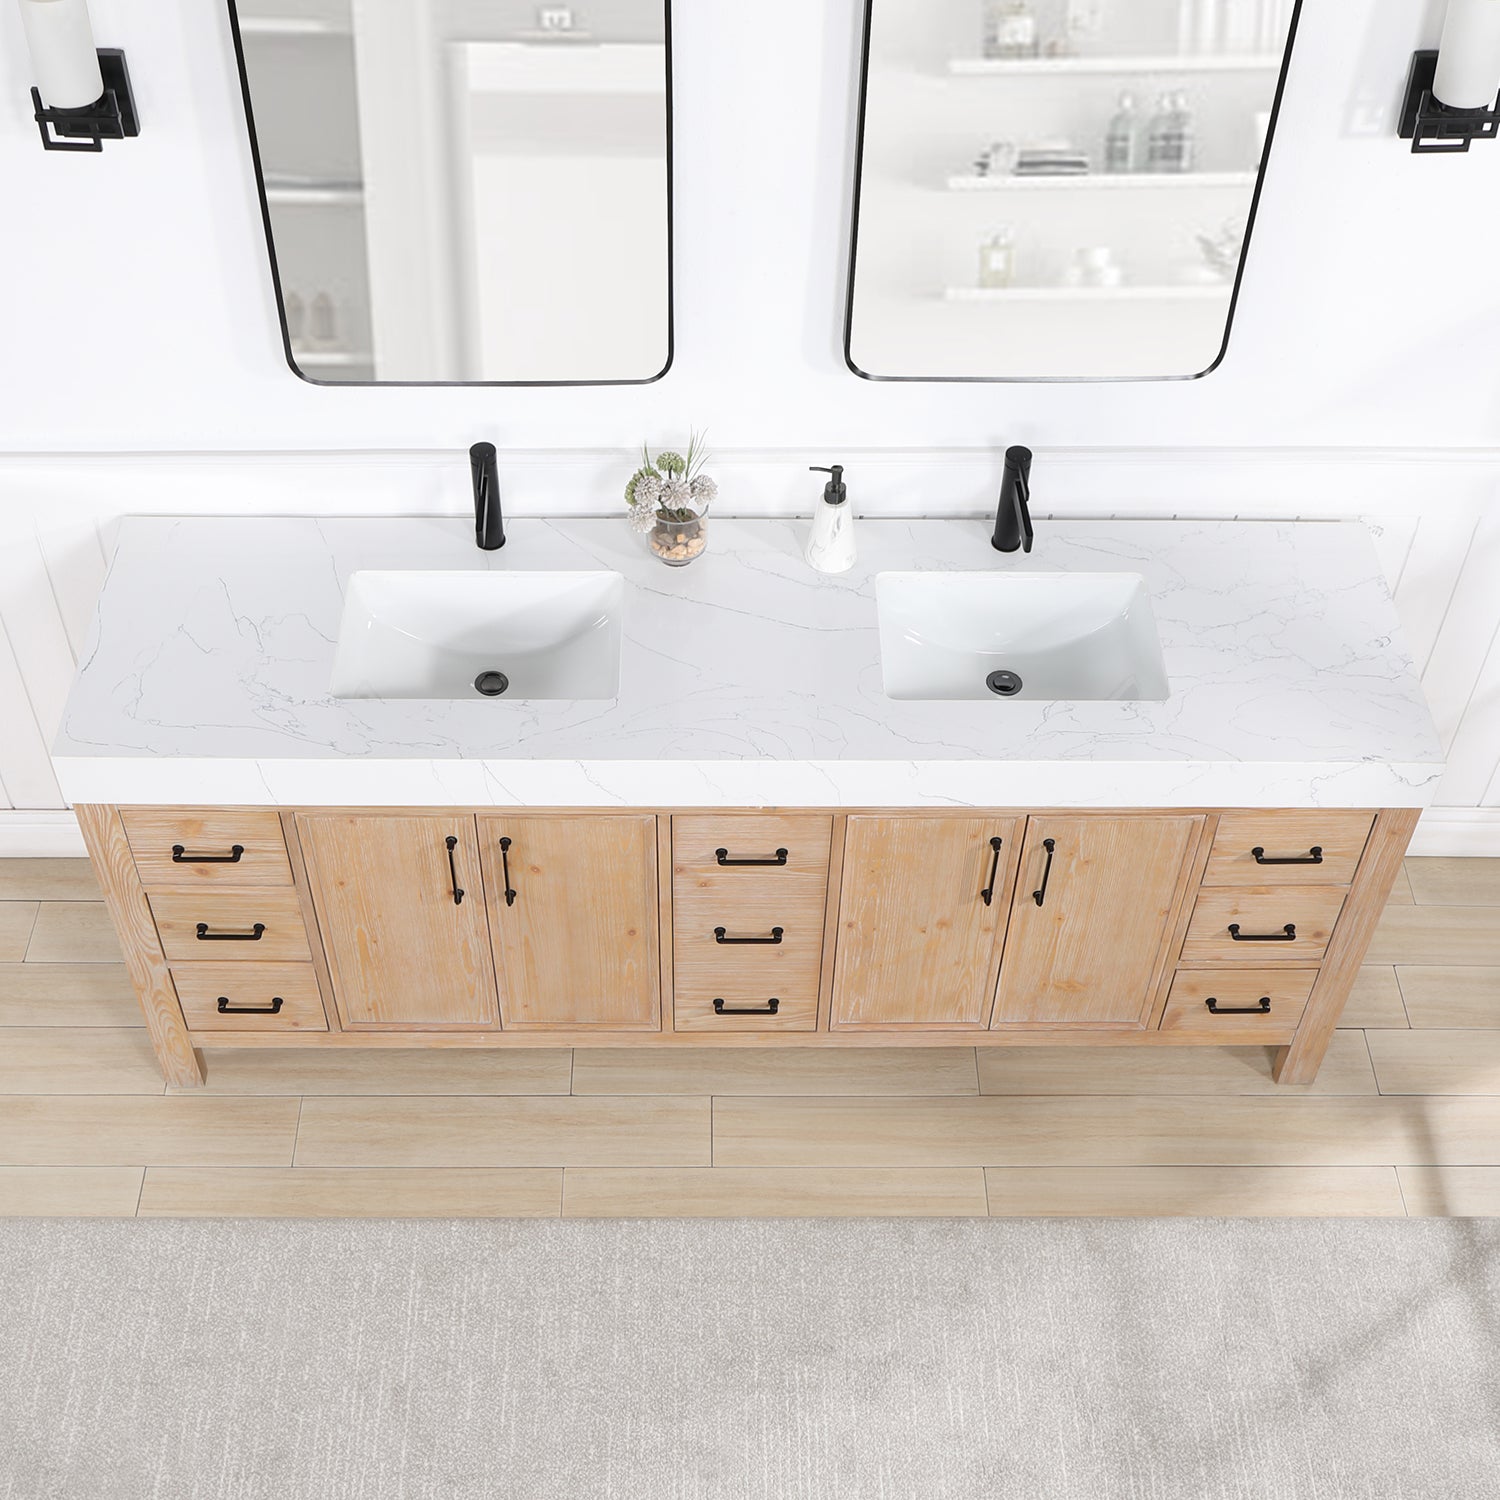 León 84in. Free-standing Double Bathroom Vanity in Fir Wood Brown with Composite top in Lightning White